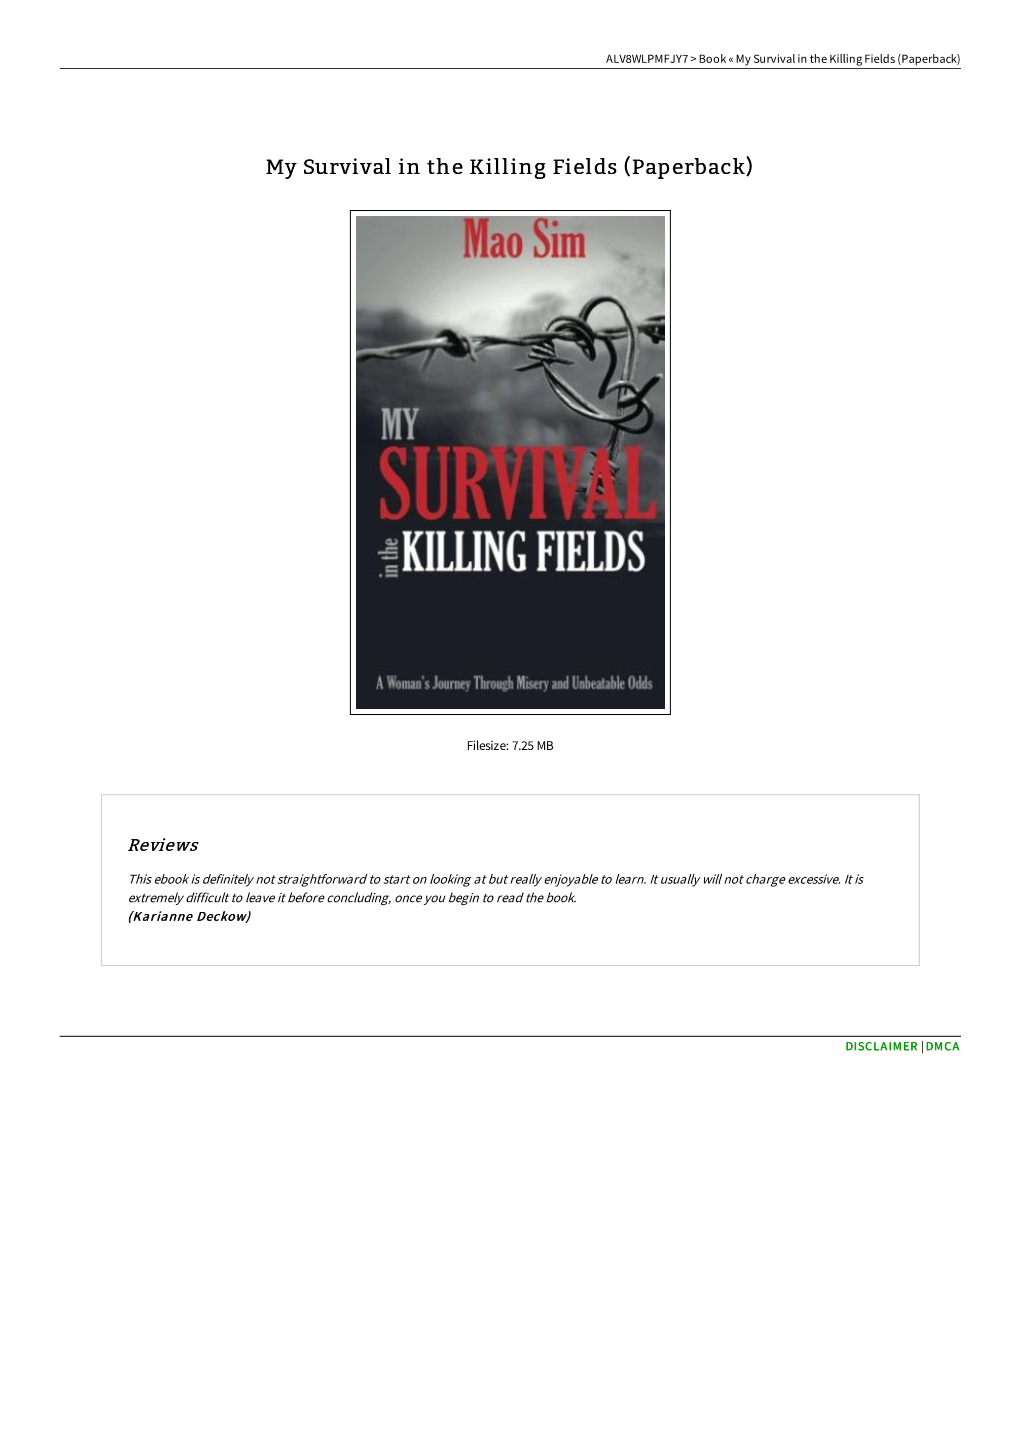 Read PDF » My Survival in the Killing Fields (Paperback) // 6XOOSBOW2BXK